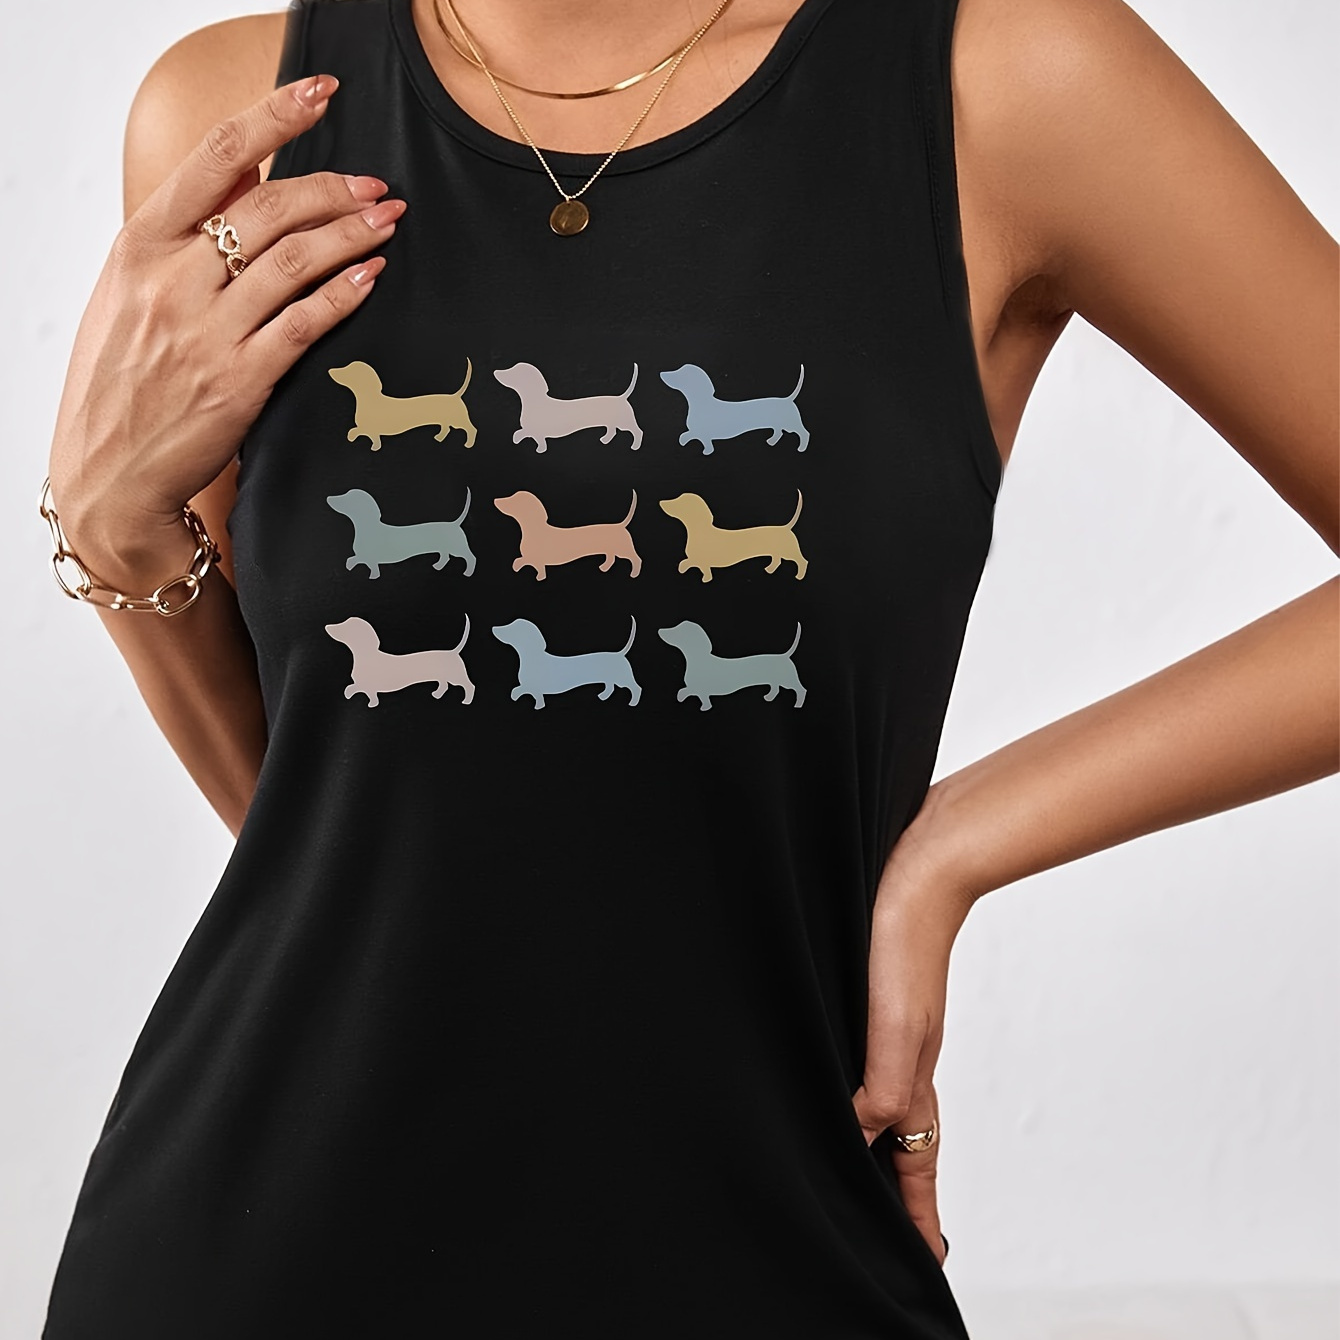 

Women's Fashion Contrast Dachshund Dog Print Sleeveless Round Neck Tank Top T-shirt, Casual Summer Vest